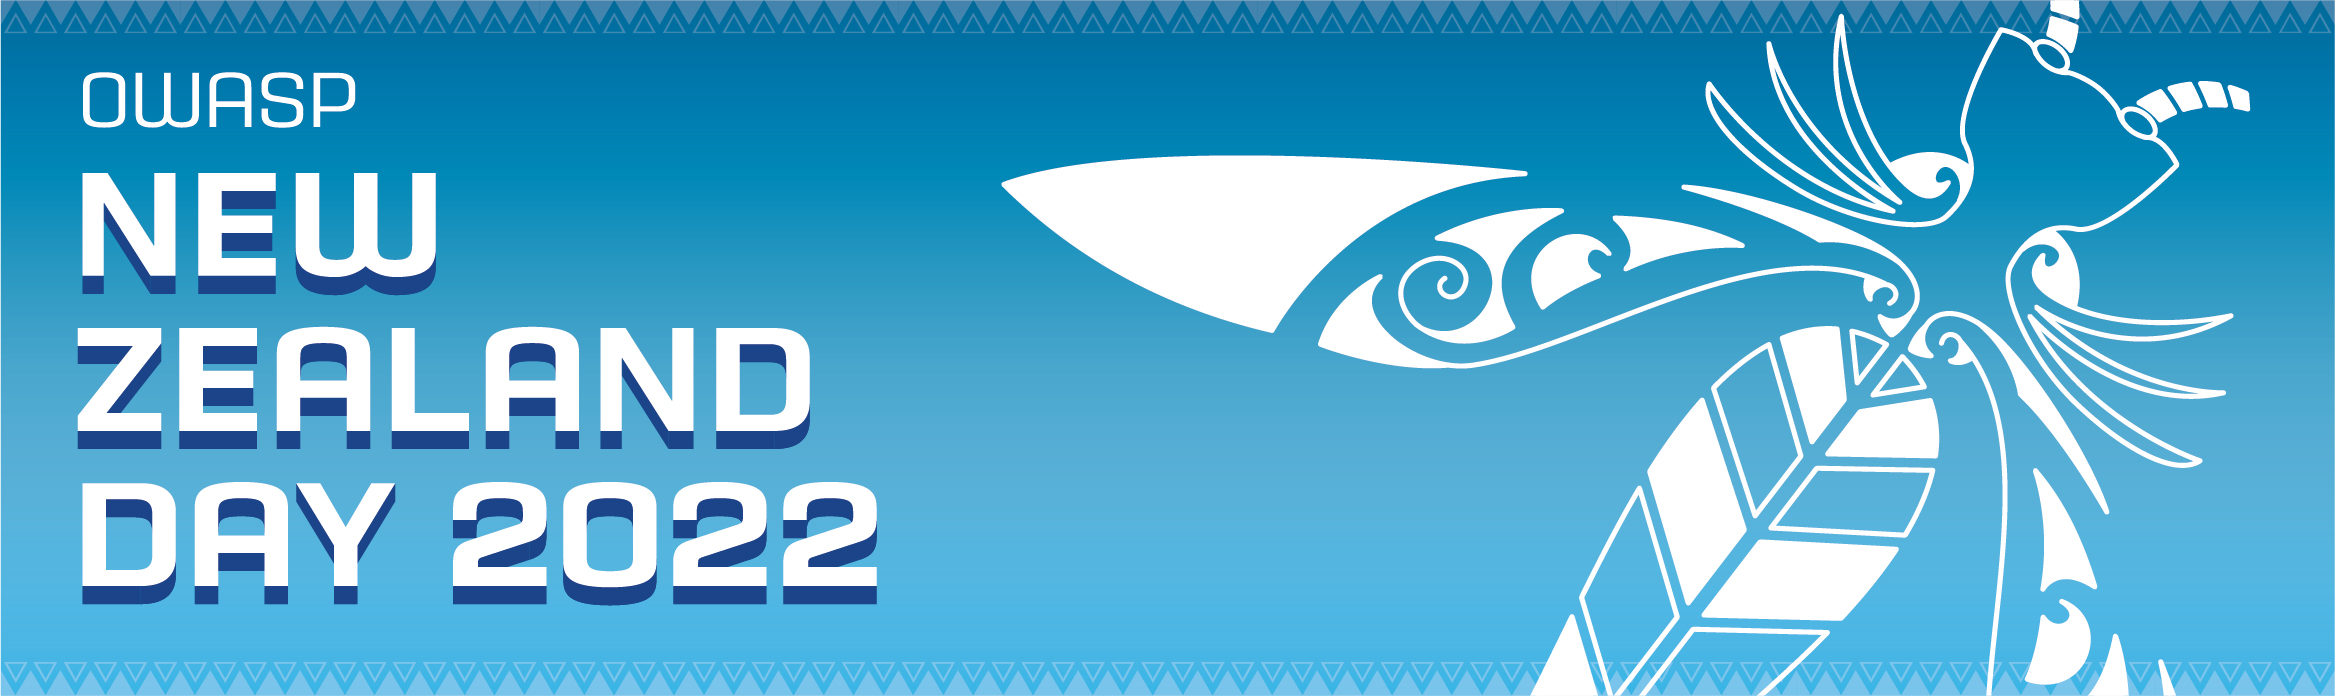 OWASP NZ Day - Web Banner